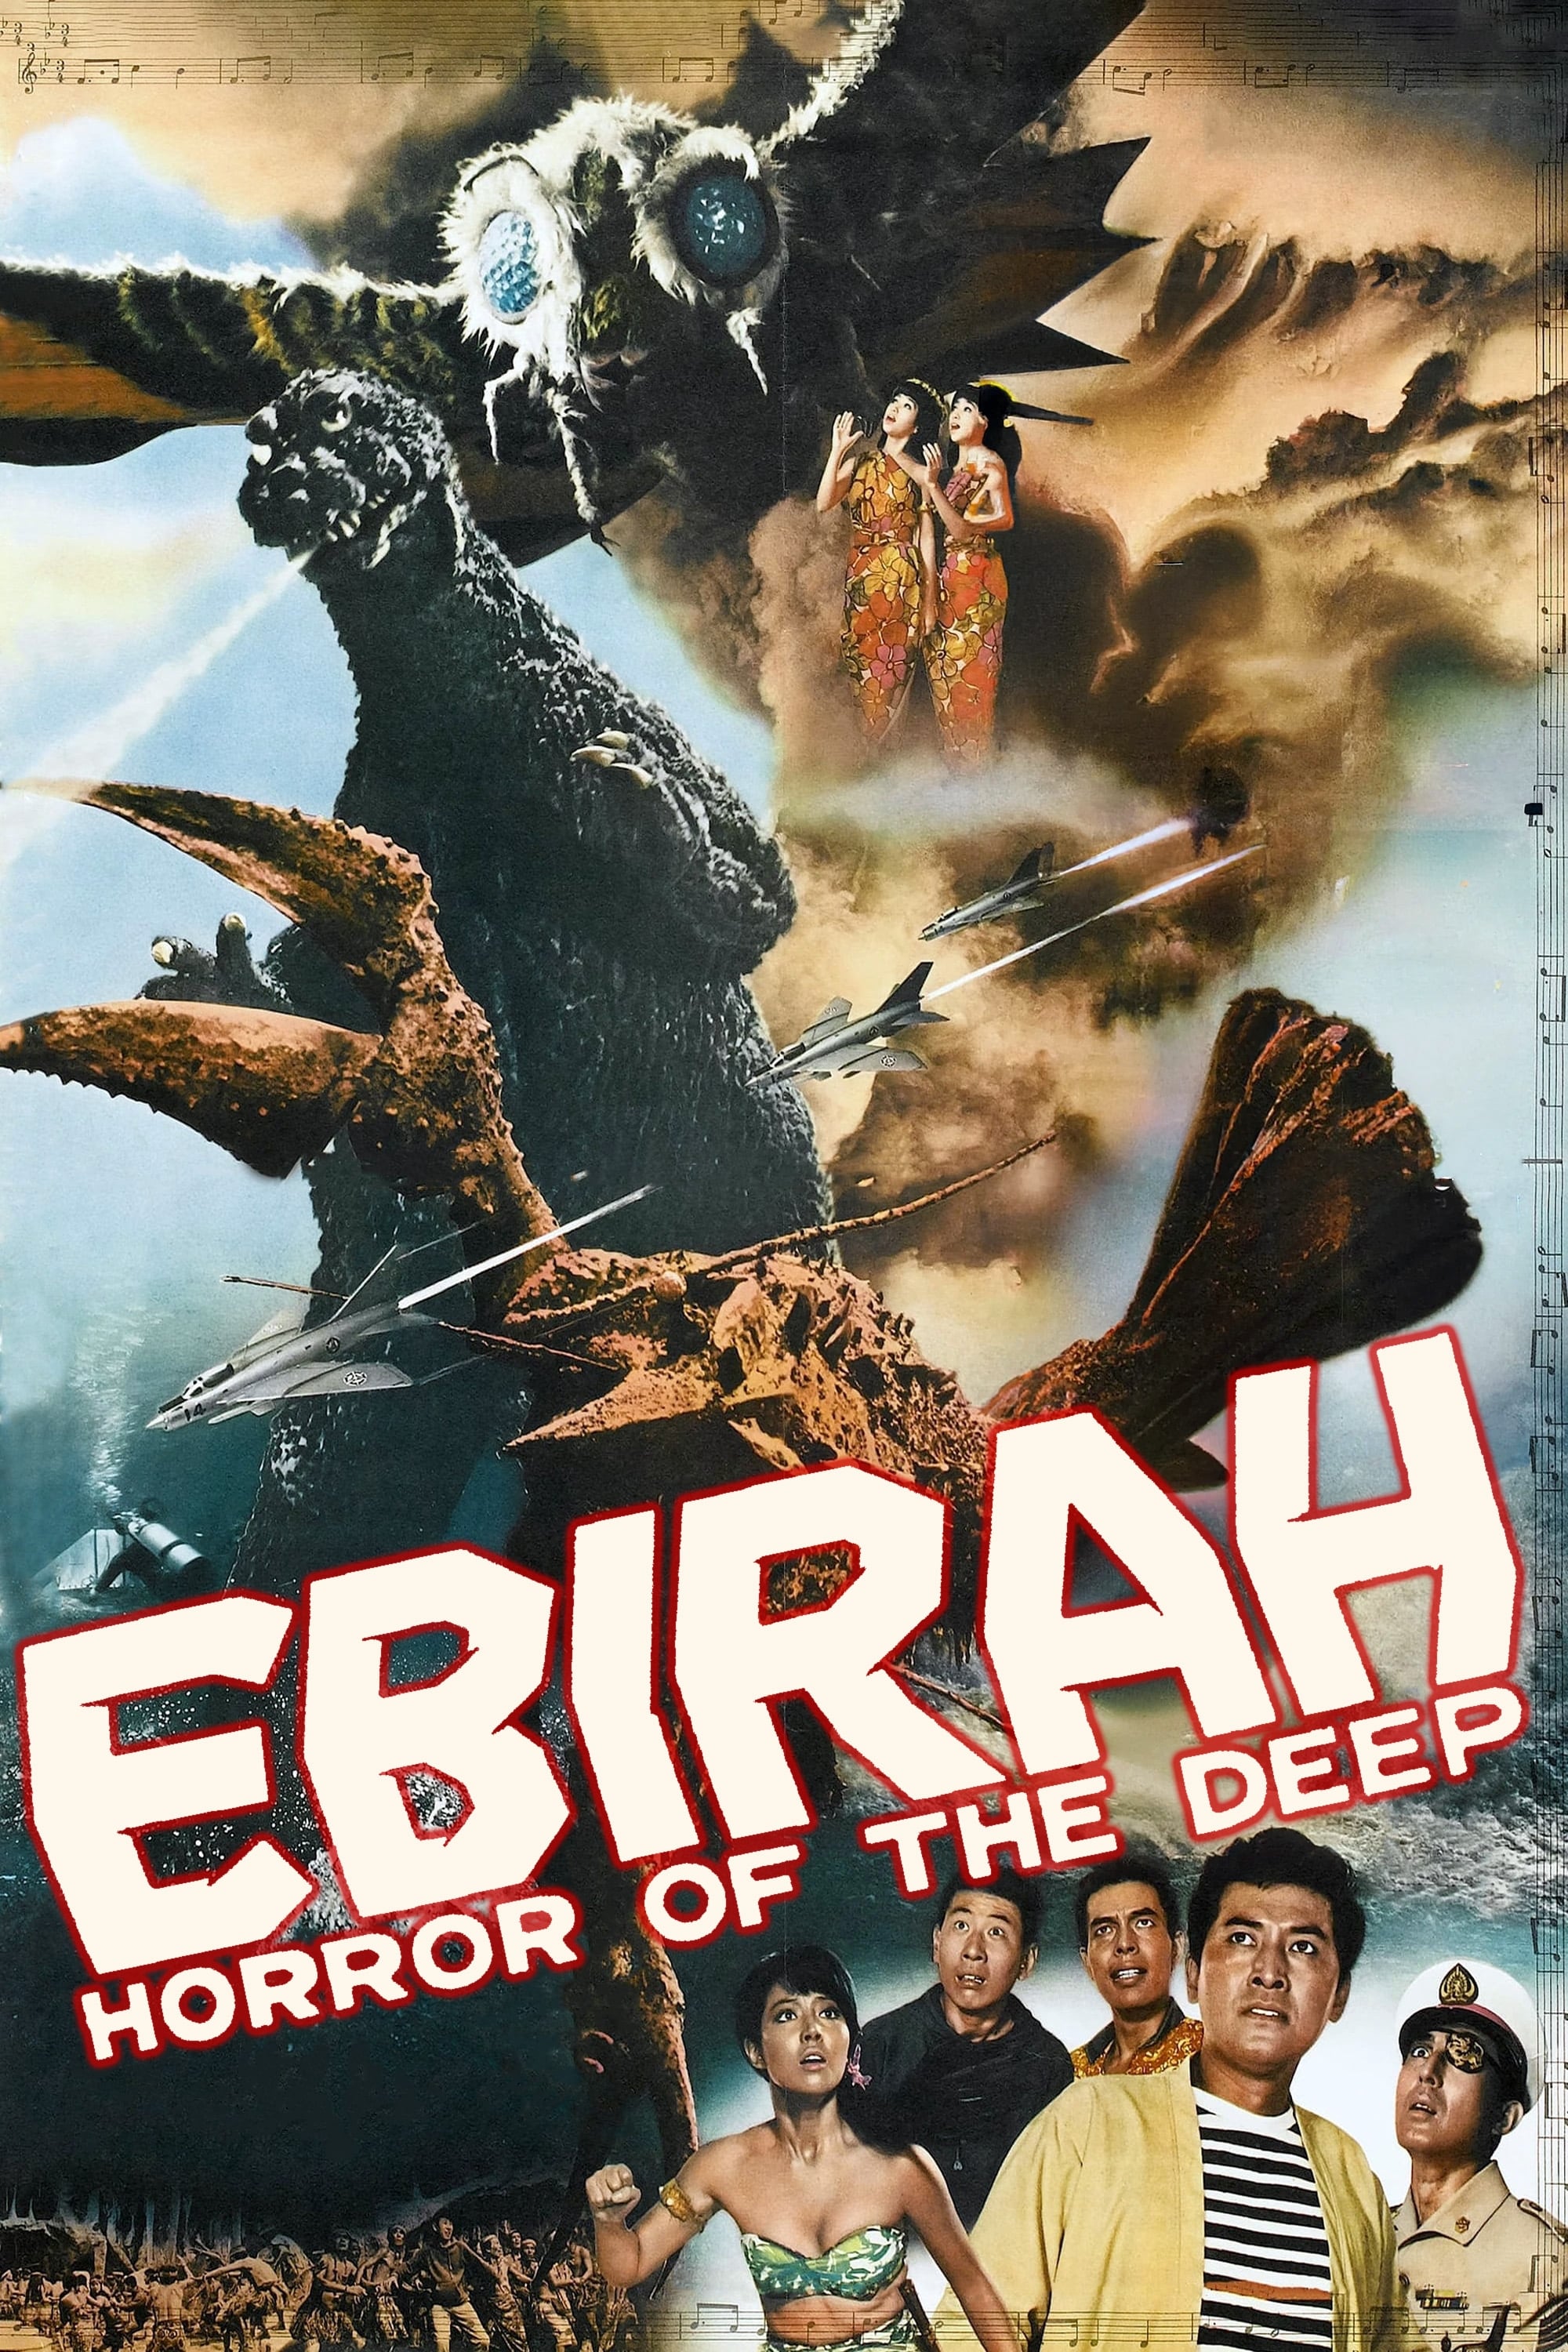 Ebirah, Horror of the Deep